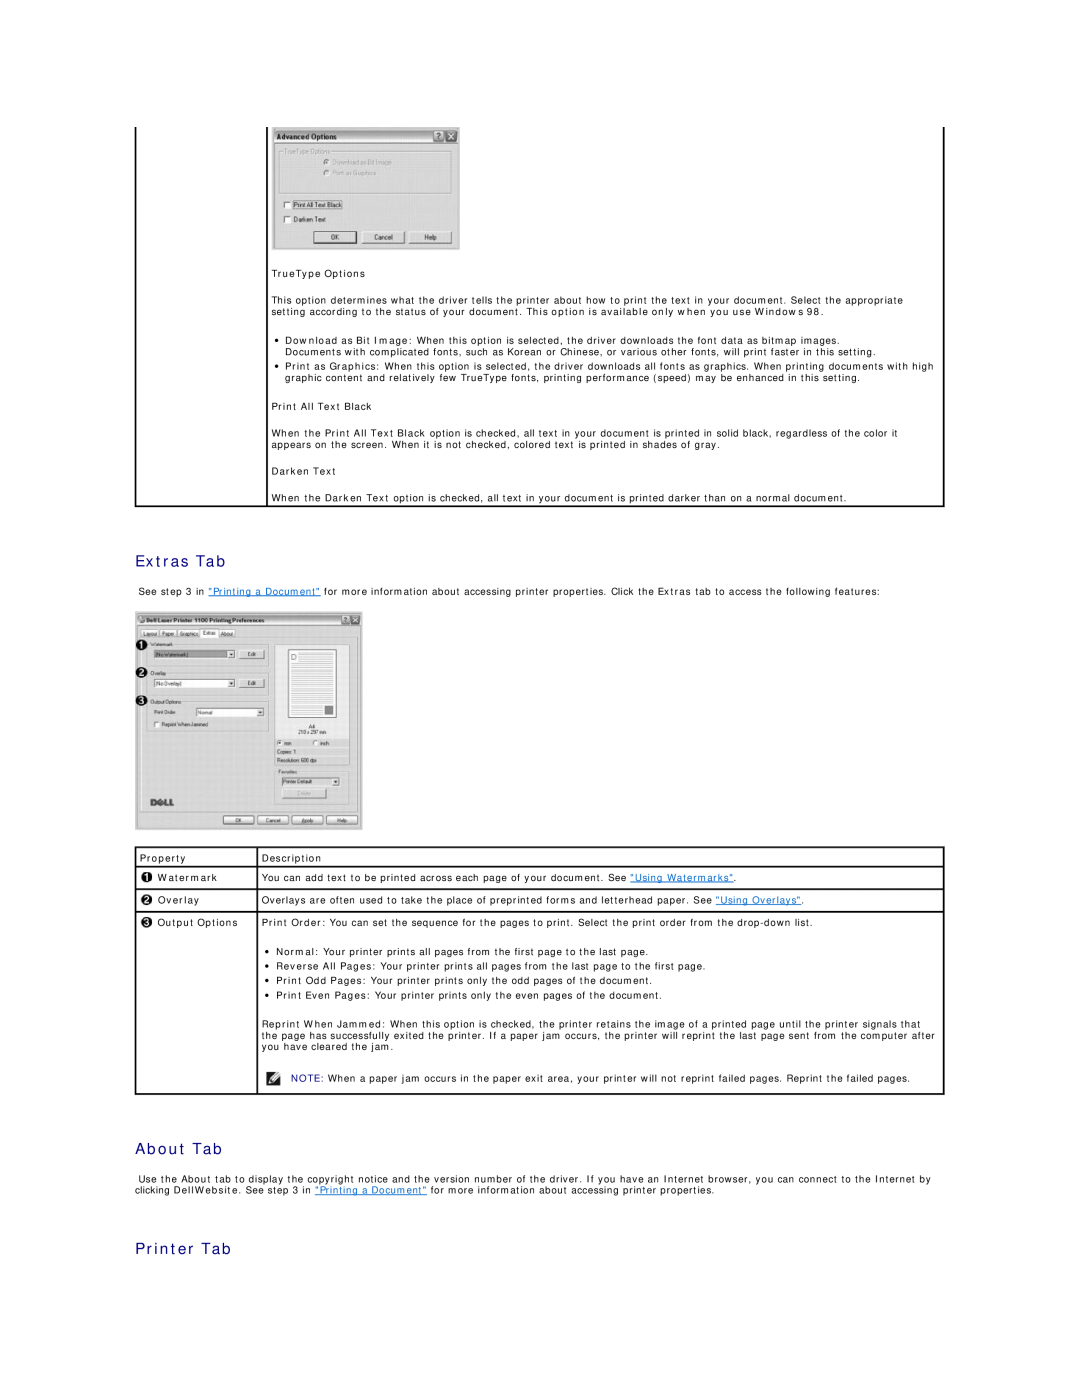 Dell 1100 Extras Tab, About Tab, Printer Tab, TrueType Options, Print All Text Black, Darken Text, Watermark, Overlay 